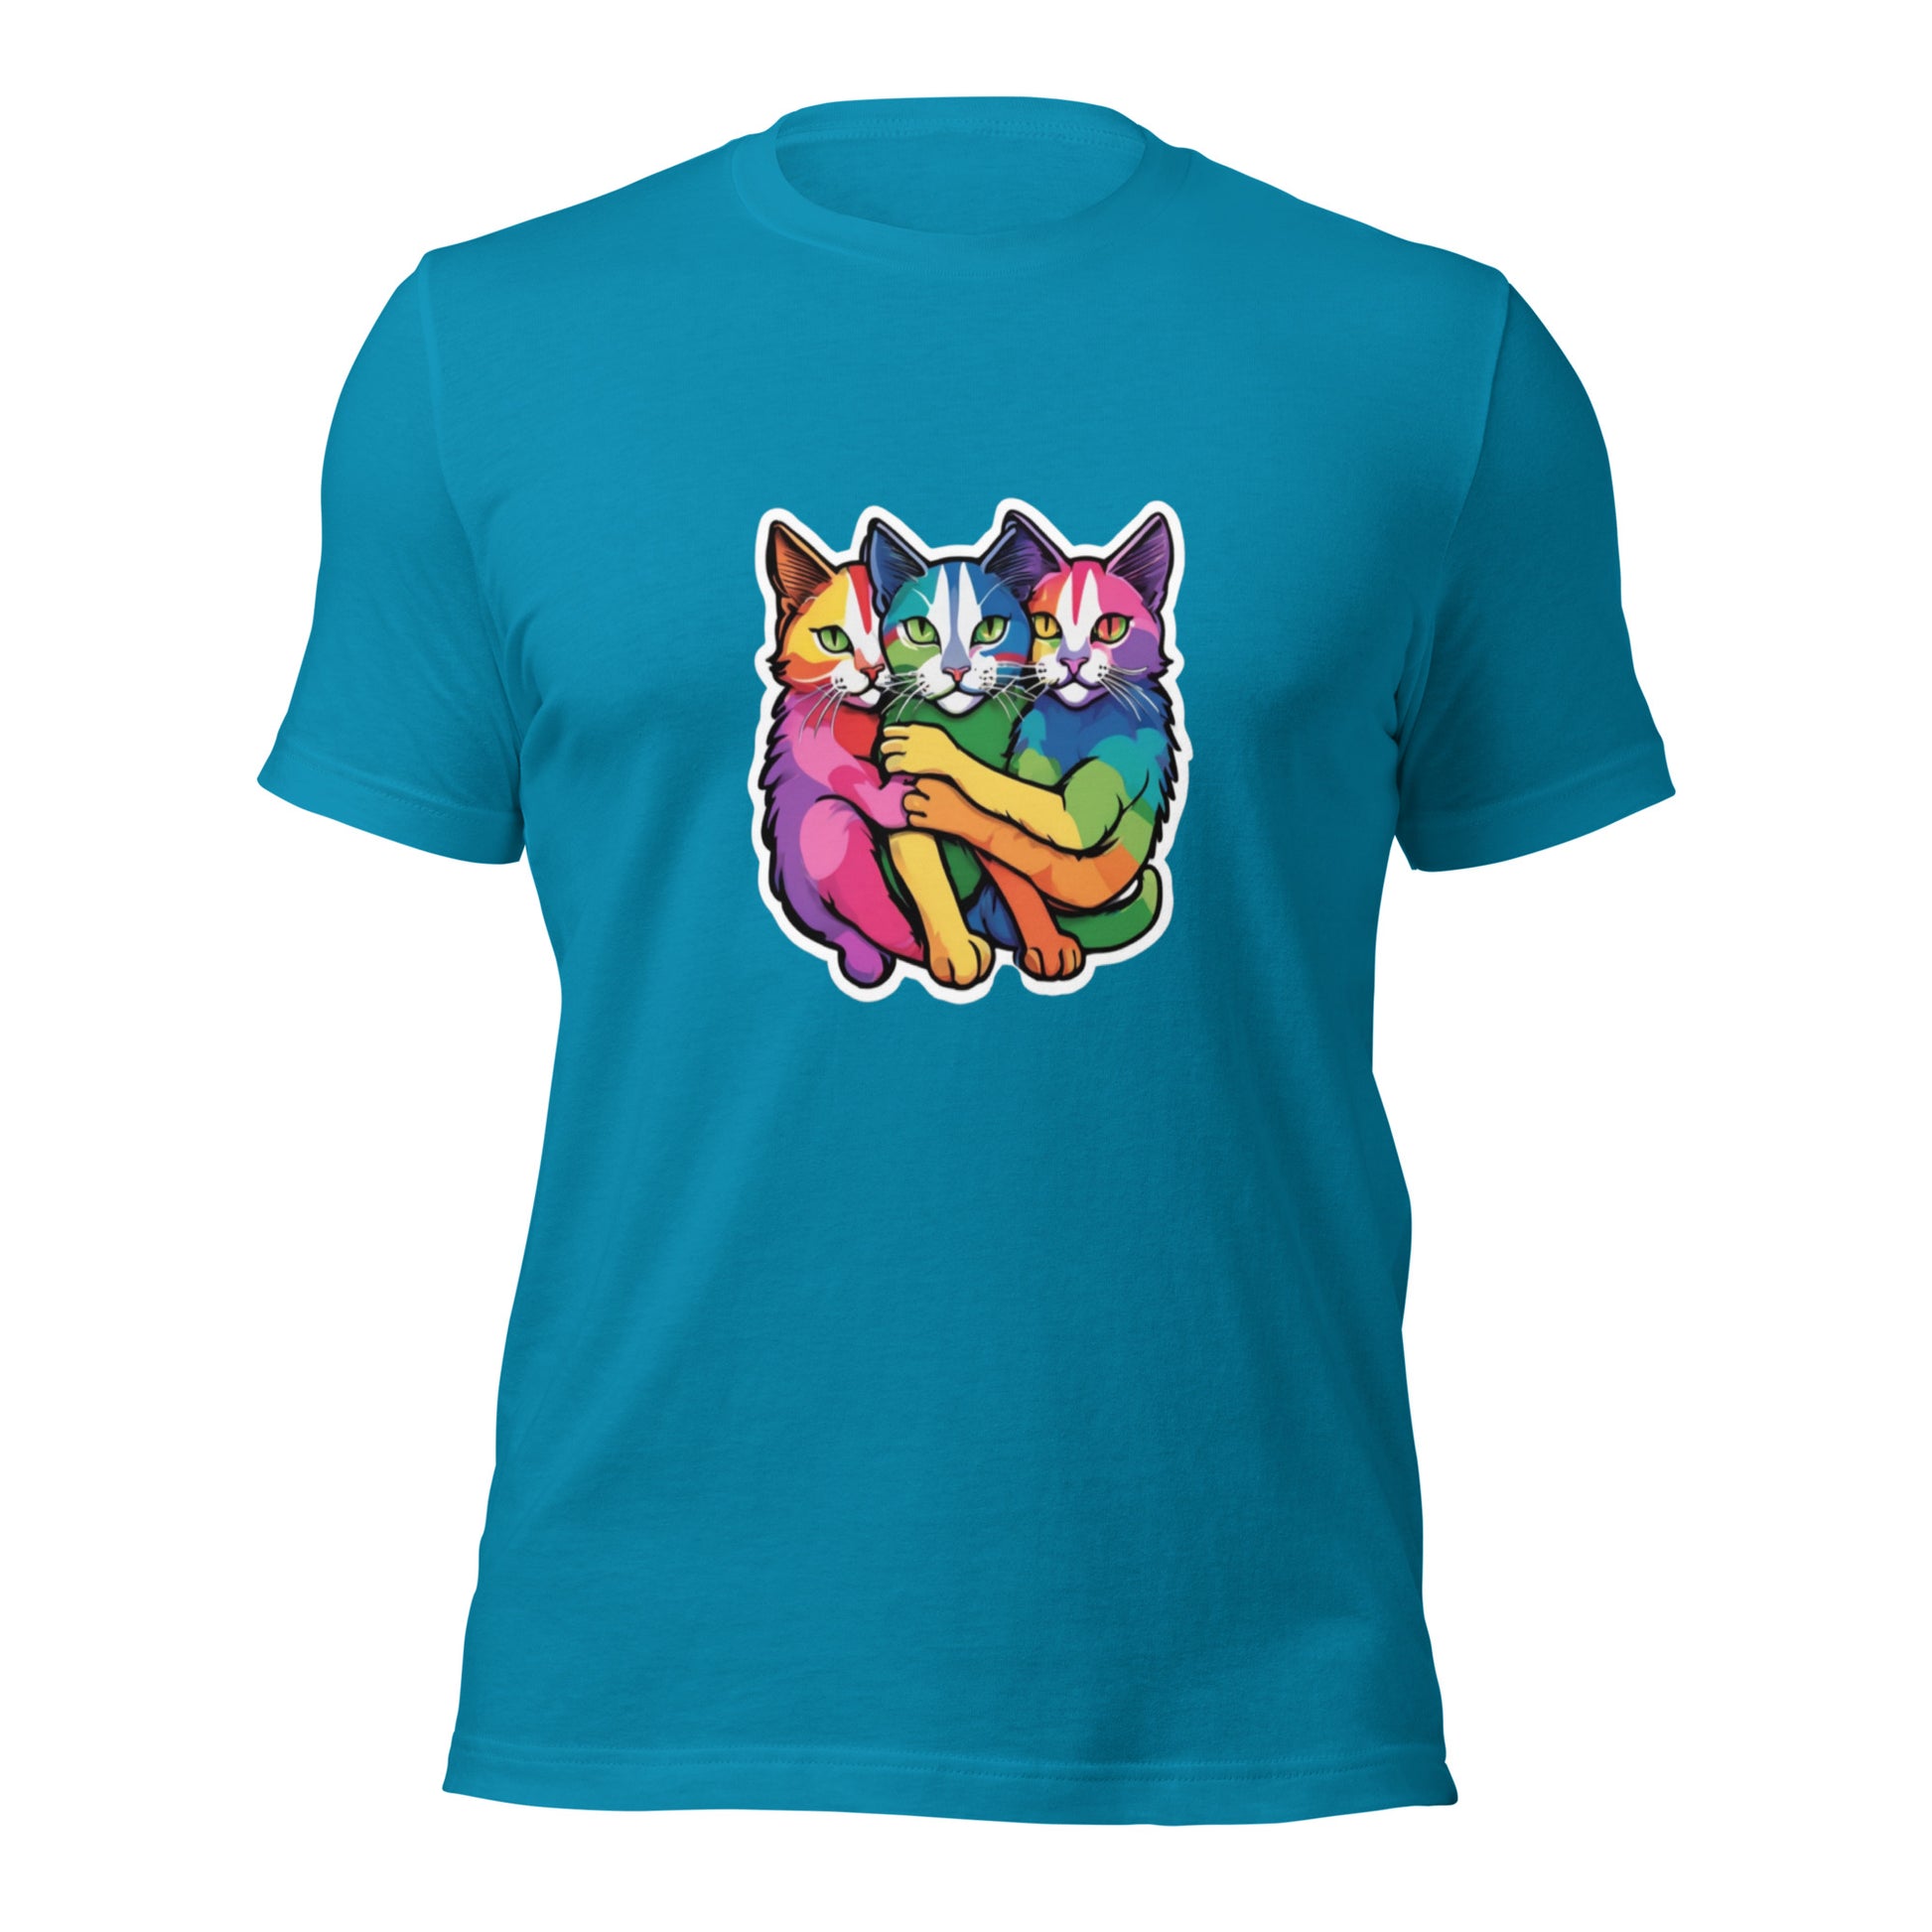 LGBTQ+ Pride Hug T-Shirt featuring Rainbow Cats - Love Is Love Fashion